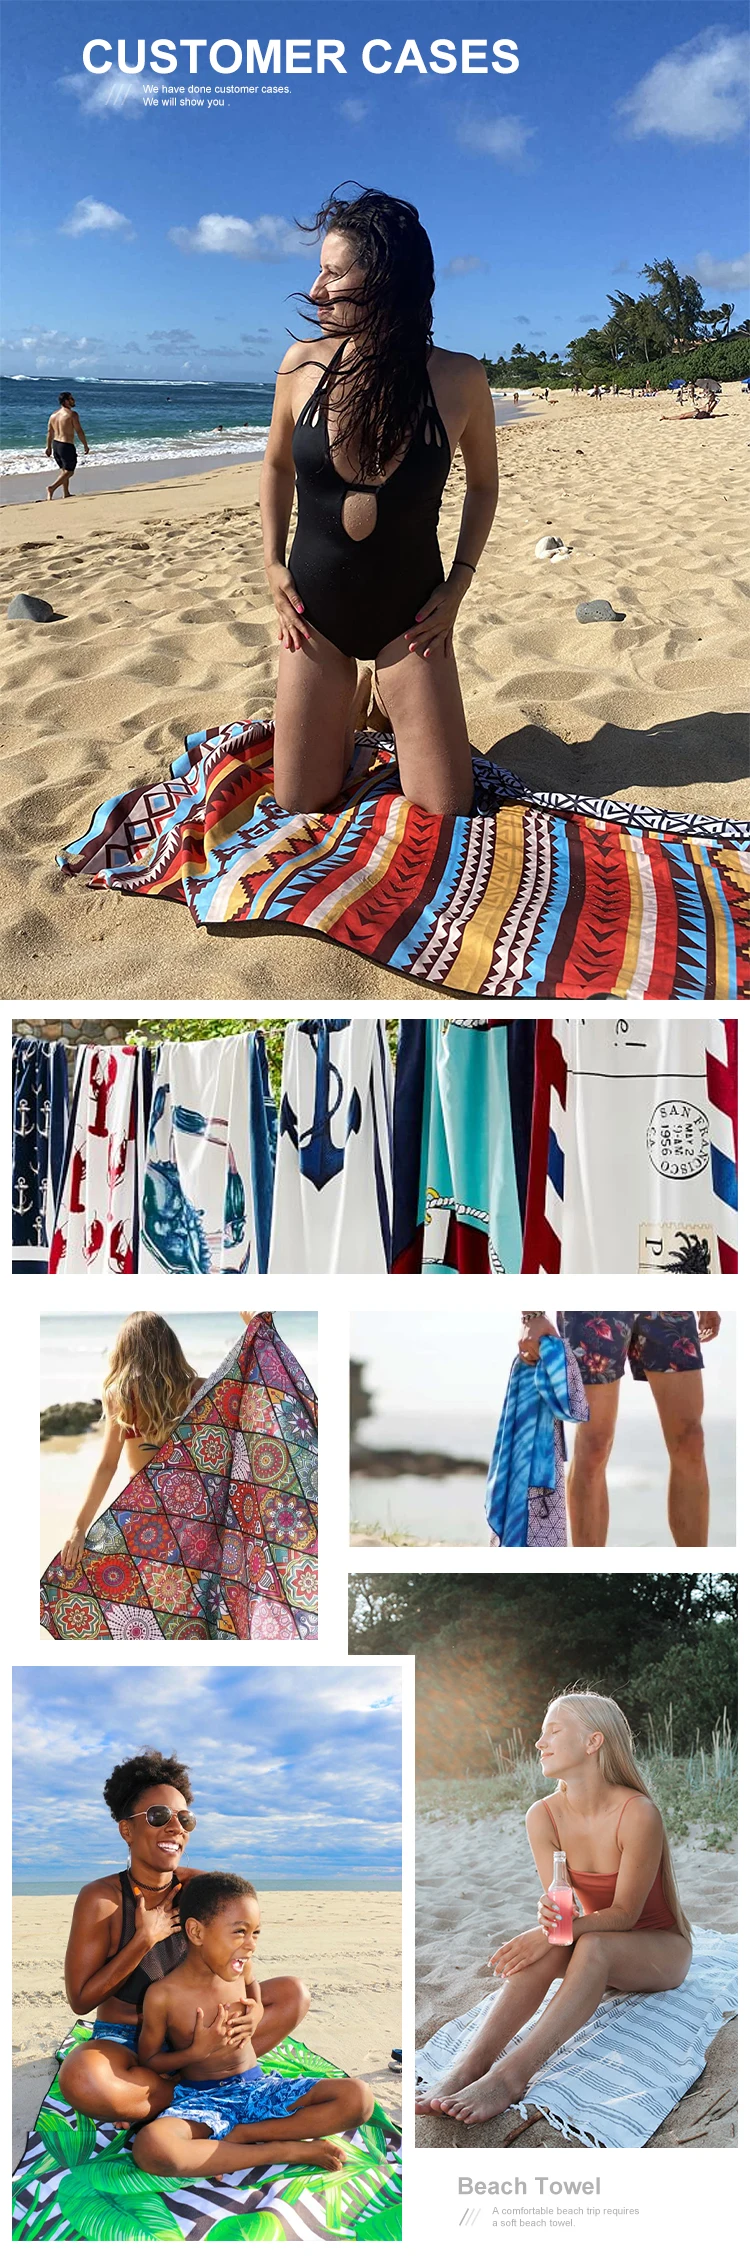 Personalized Bath Towels With Mesh Beach Bag Wholesale Custom Print Tropical Plant Logo Microfiber Beach Towel